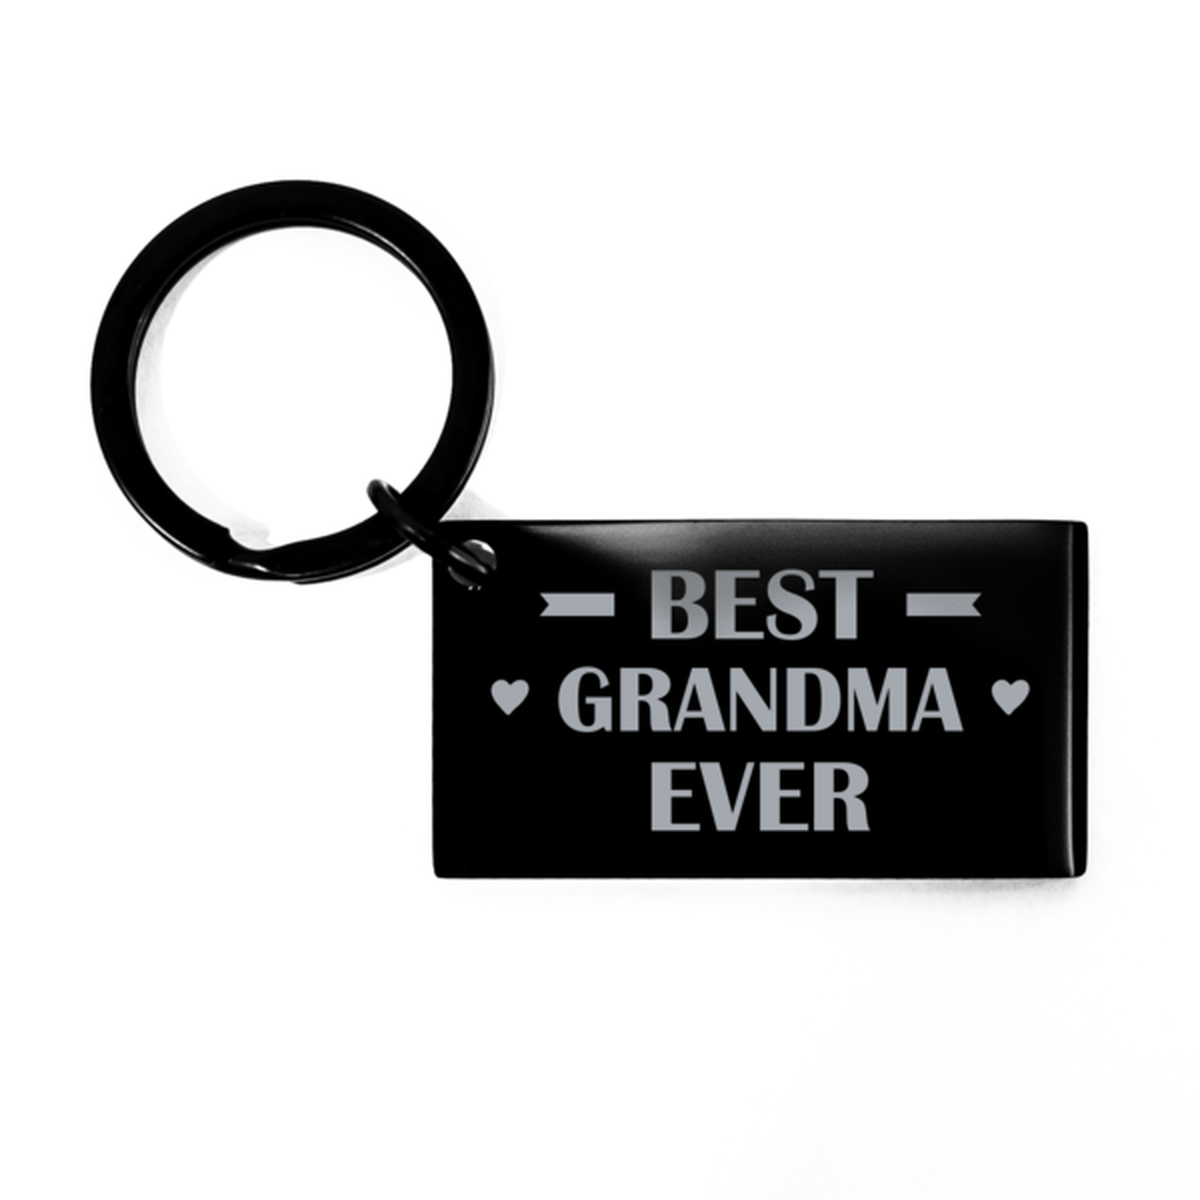 Best Grandma Ever Grandma Gifts, Funny Black Keychain For Grandma, Birthday Engraved Keyring Presents For Women